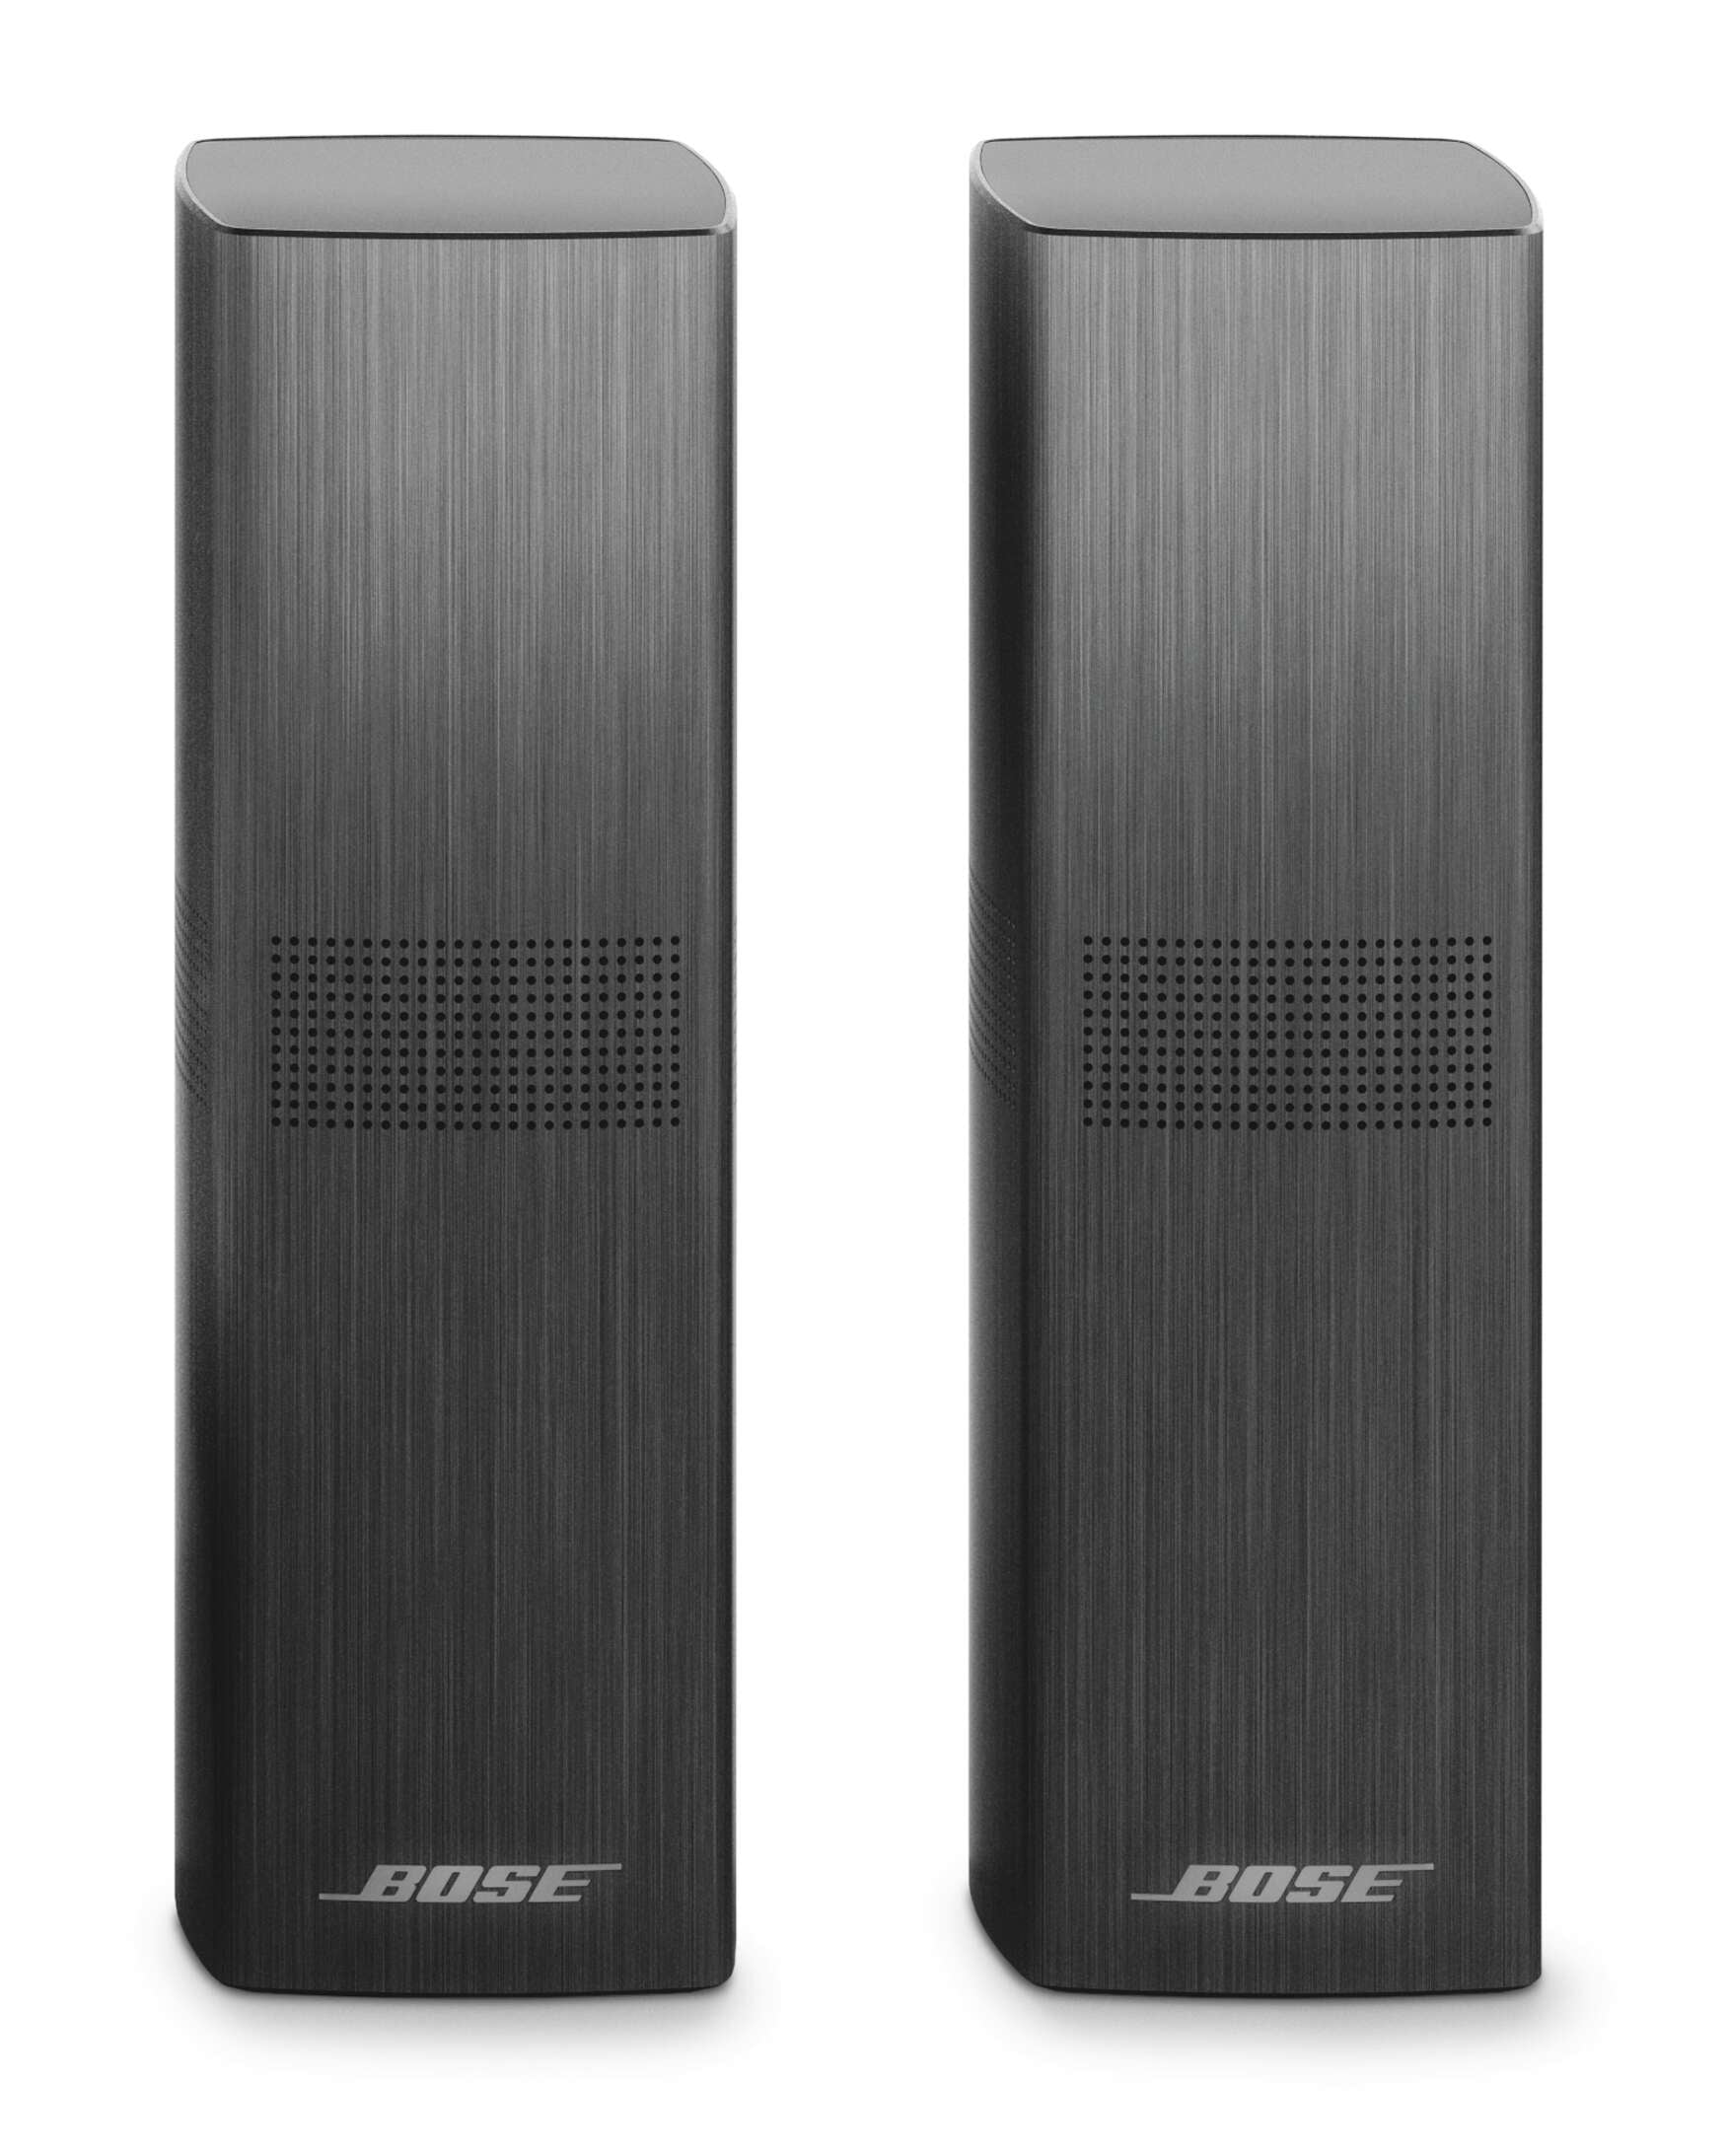 Bose Surround Sound Speakers 700 Soundbars, Bose Black for